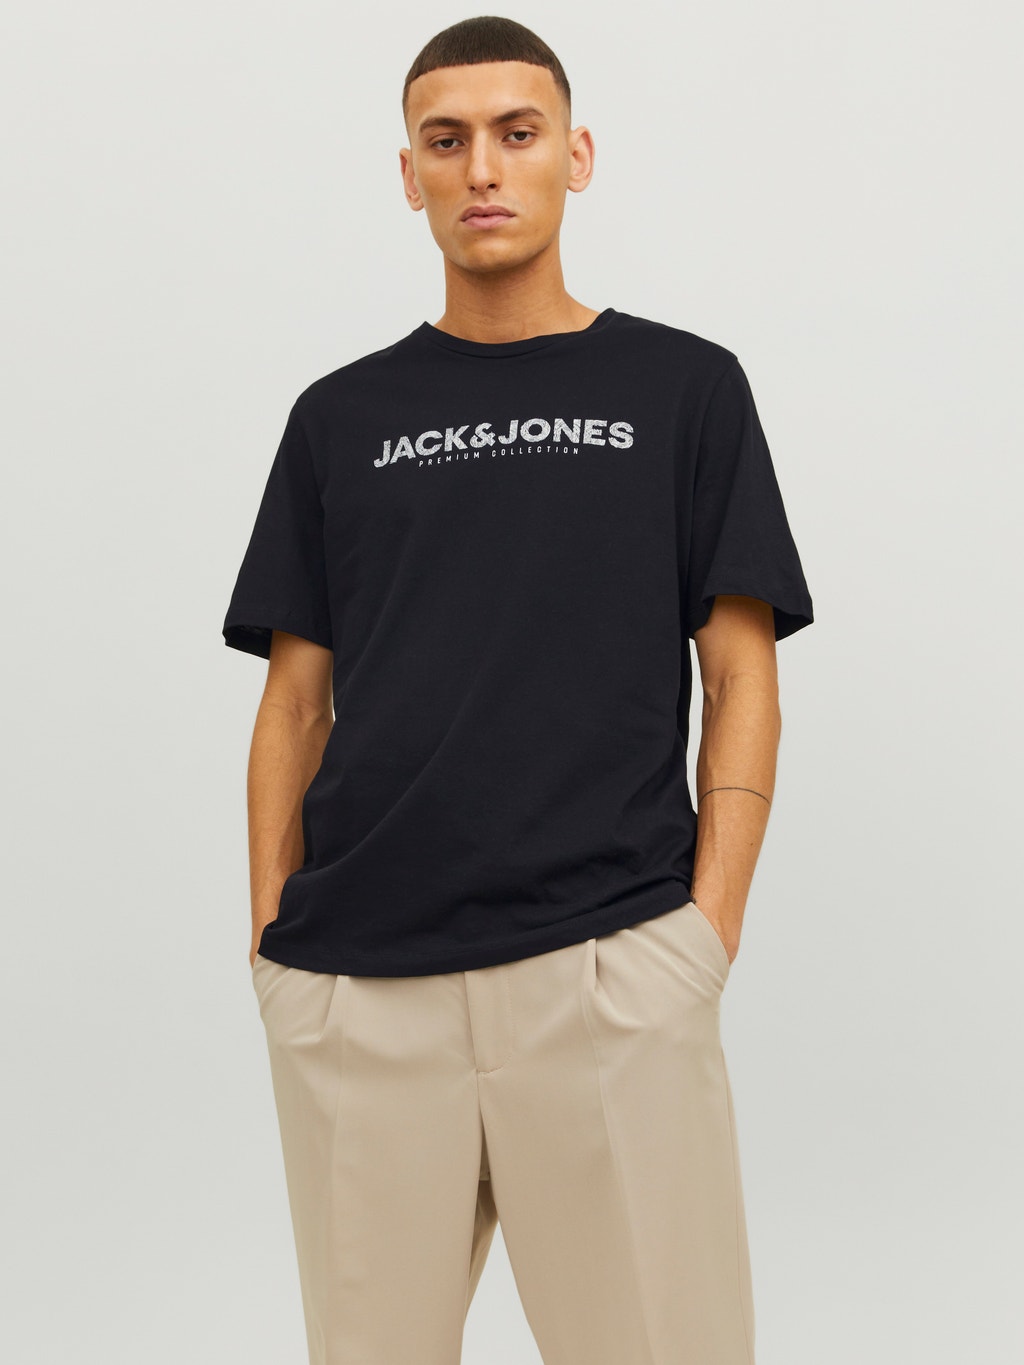 Camisetas Corte standard Cuello | Jack Jones®